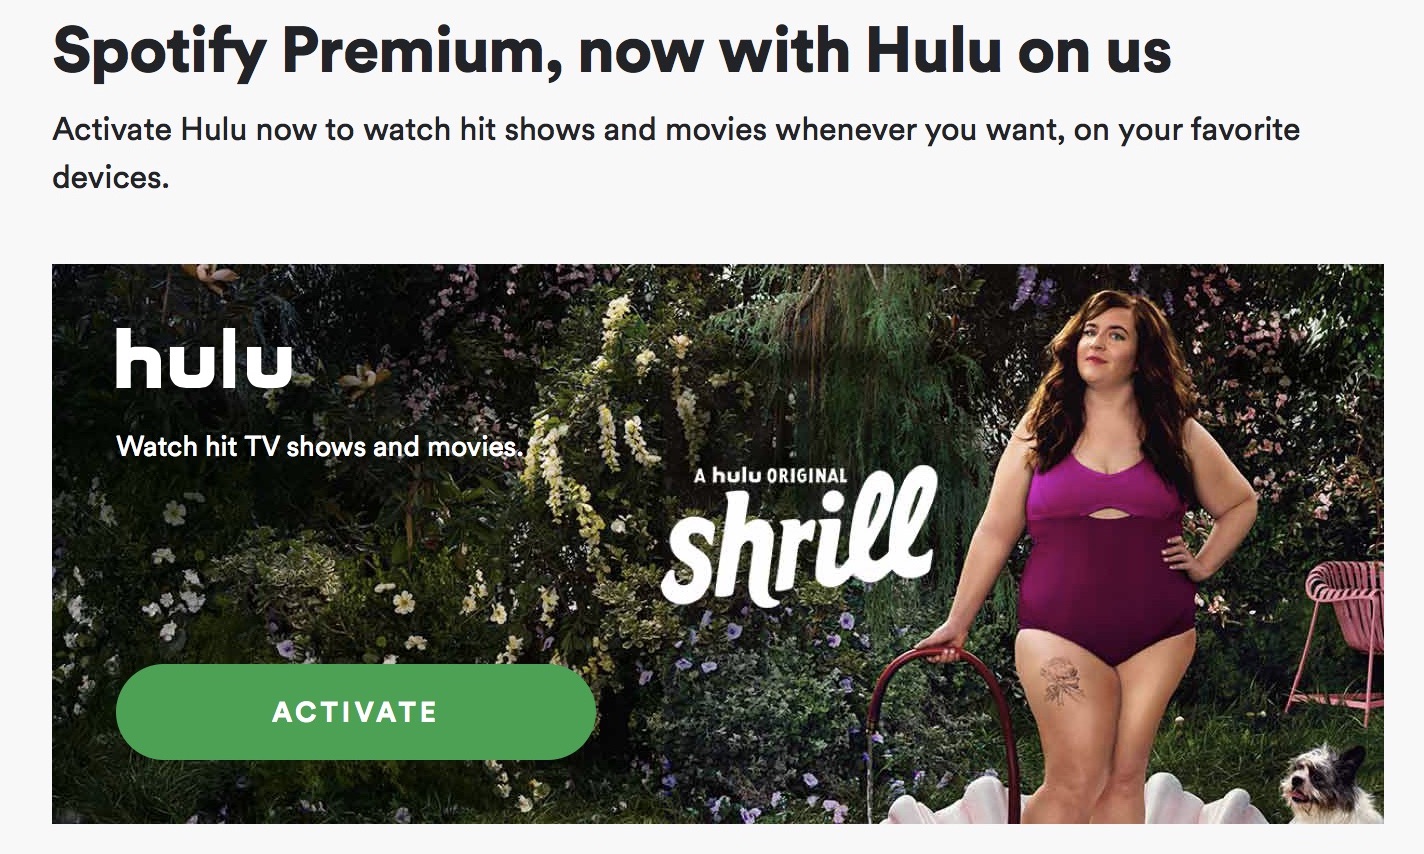 how much is spotify premium + hulu